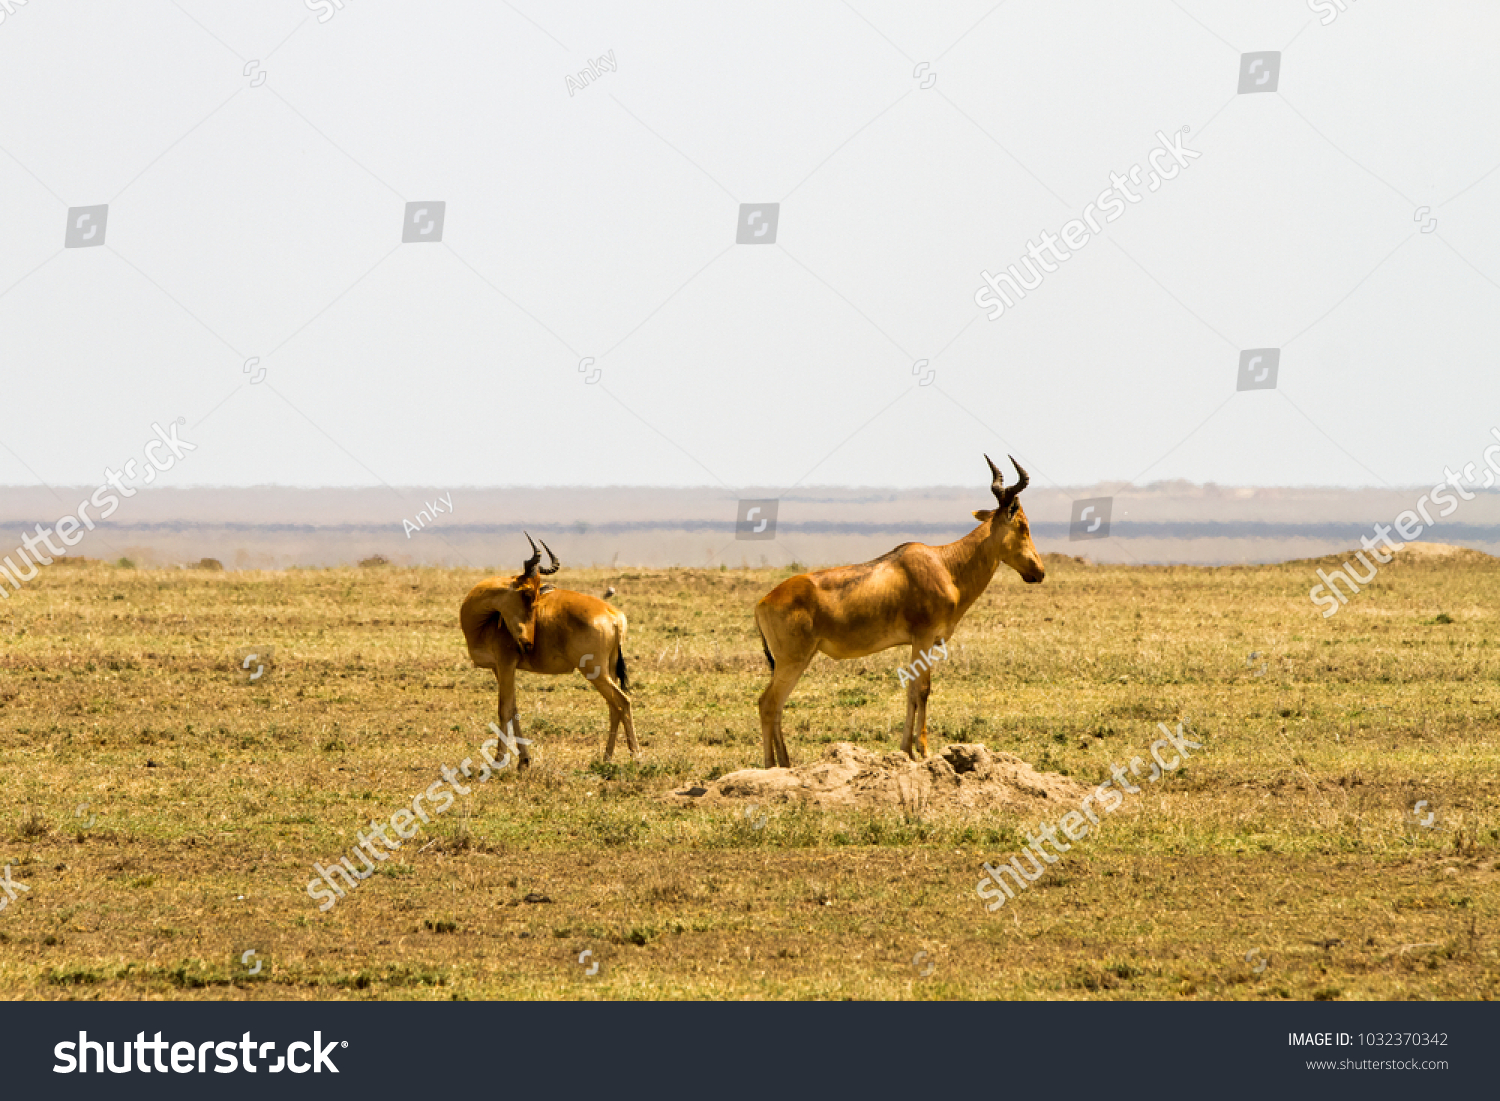 African antelope - the hartebeest (Alcelaphus buselaphus), also known as kongoni in Serengeti National Park  #1032370342